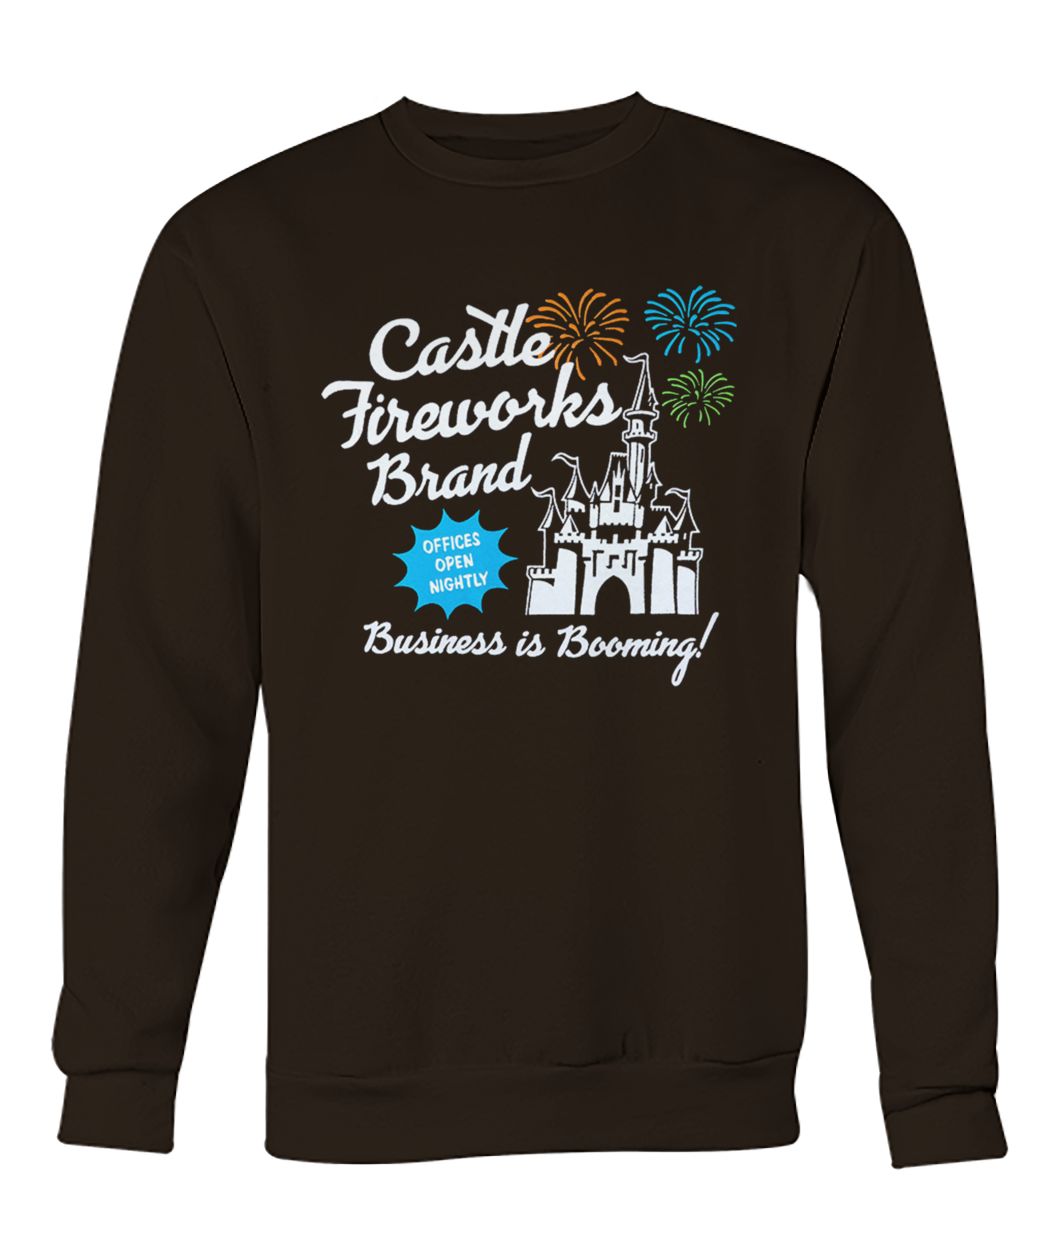 Fantasyland castle fireworks brand business is booming crew neck sweatshirt